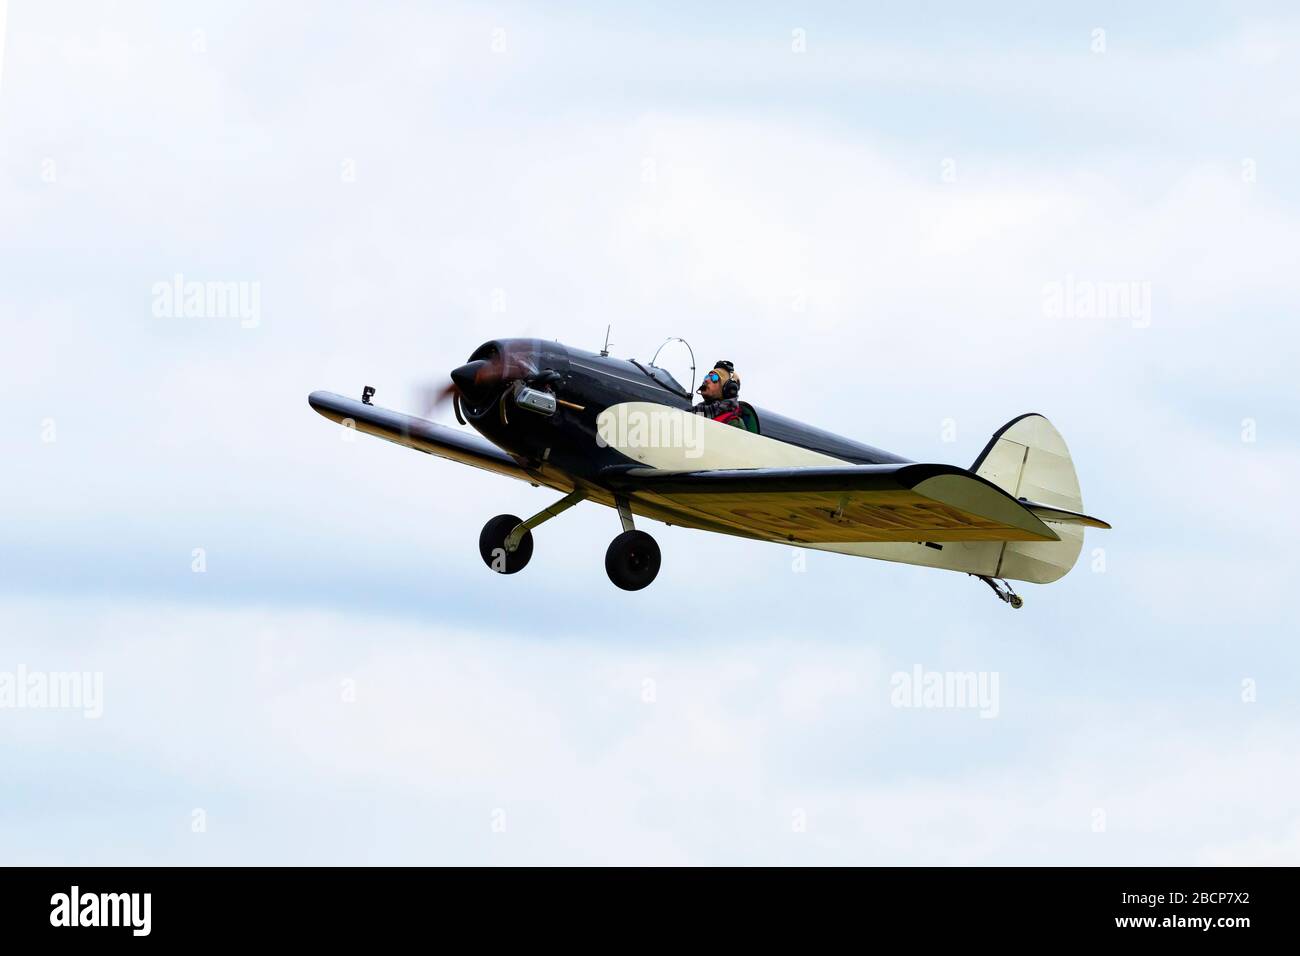 Taylor monoplane G-AWGZ Stockfoto